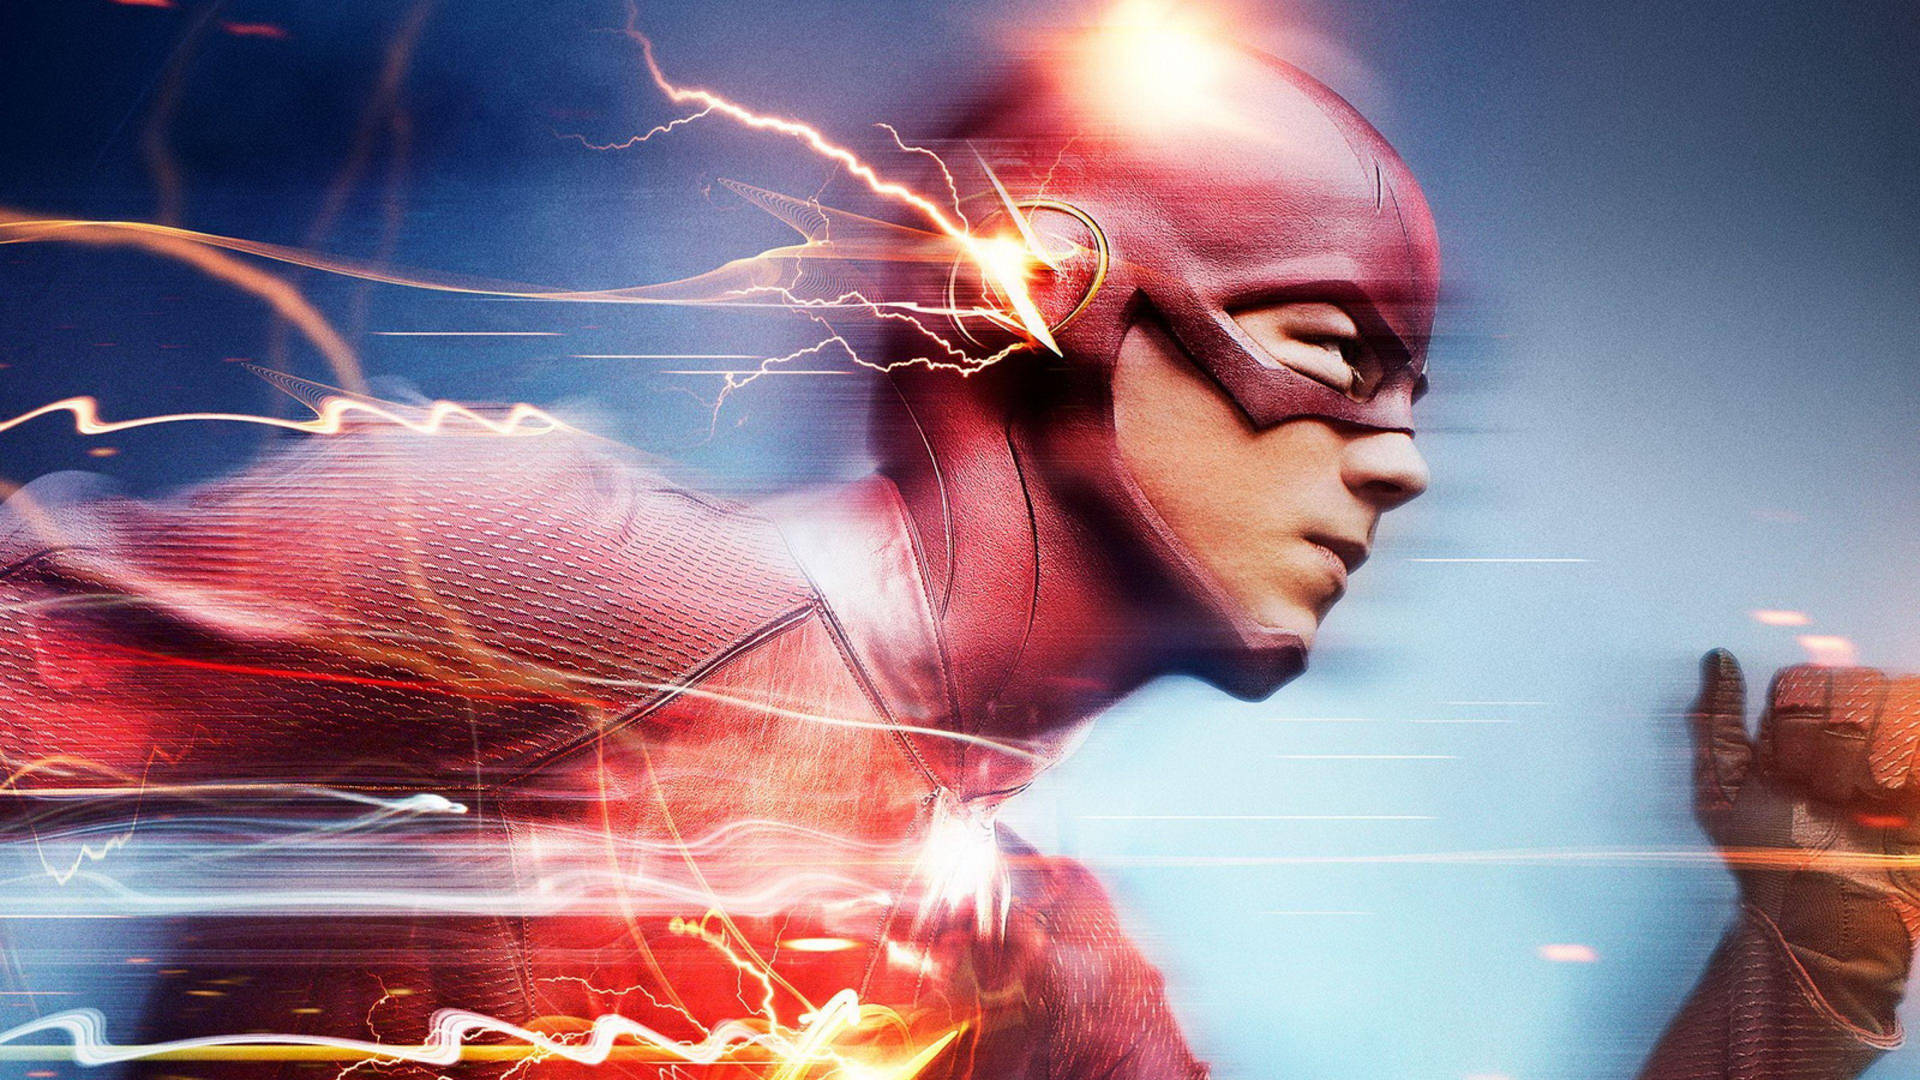 Grant Gustin The Flash Superhero Background